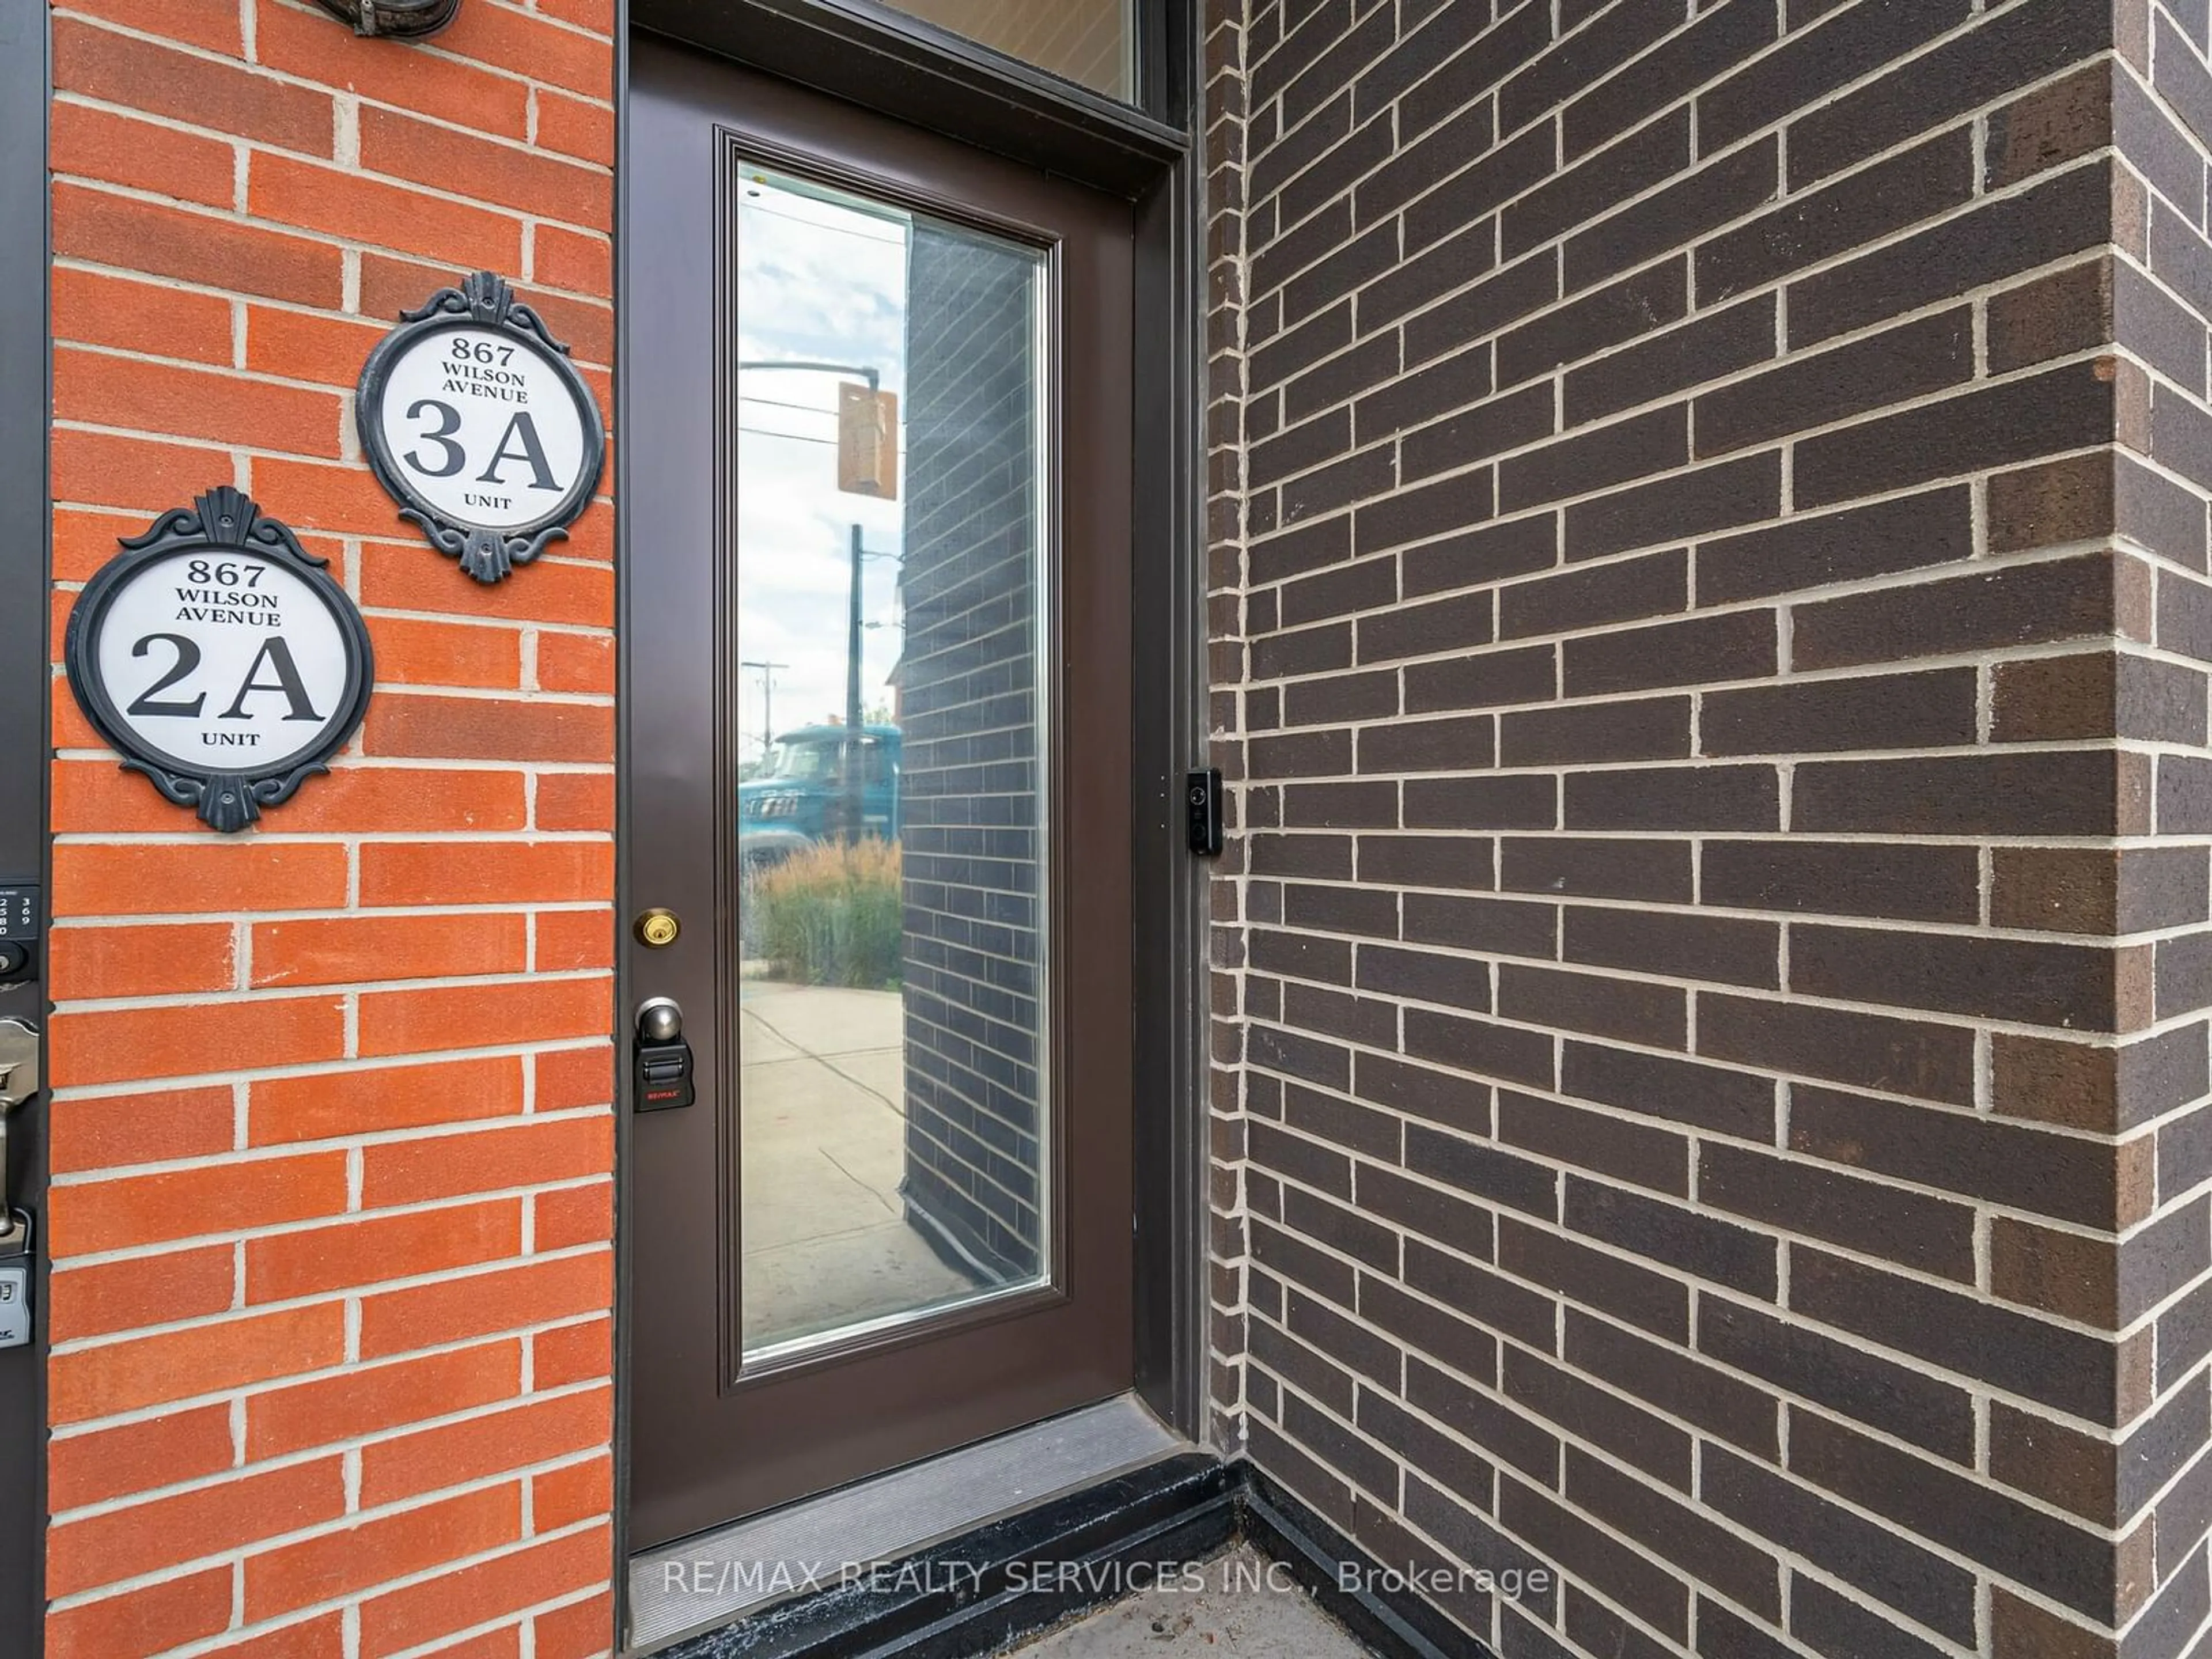 Home with brick exterior material for 867 Wilson Ave #3A, Toronto Ontario M3K 1E6